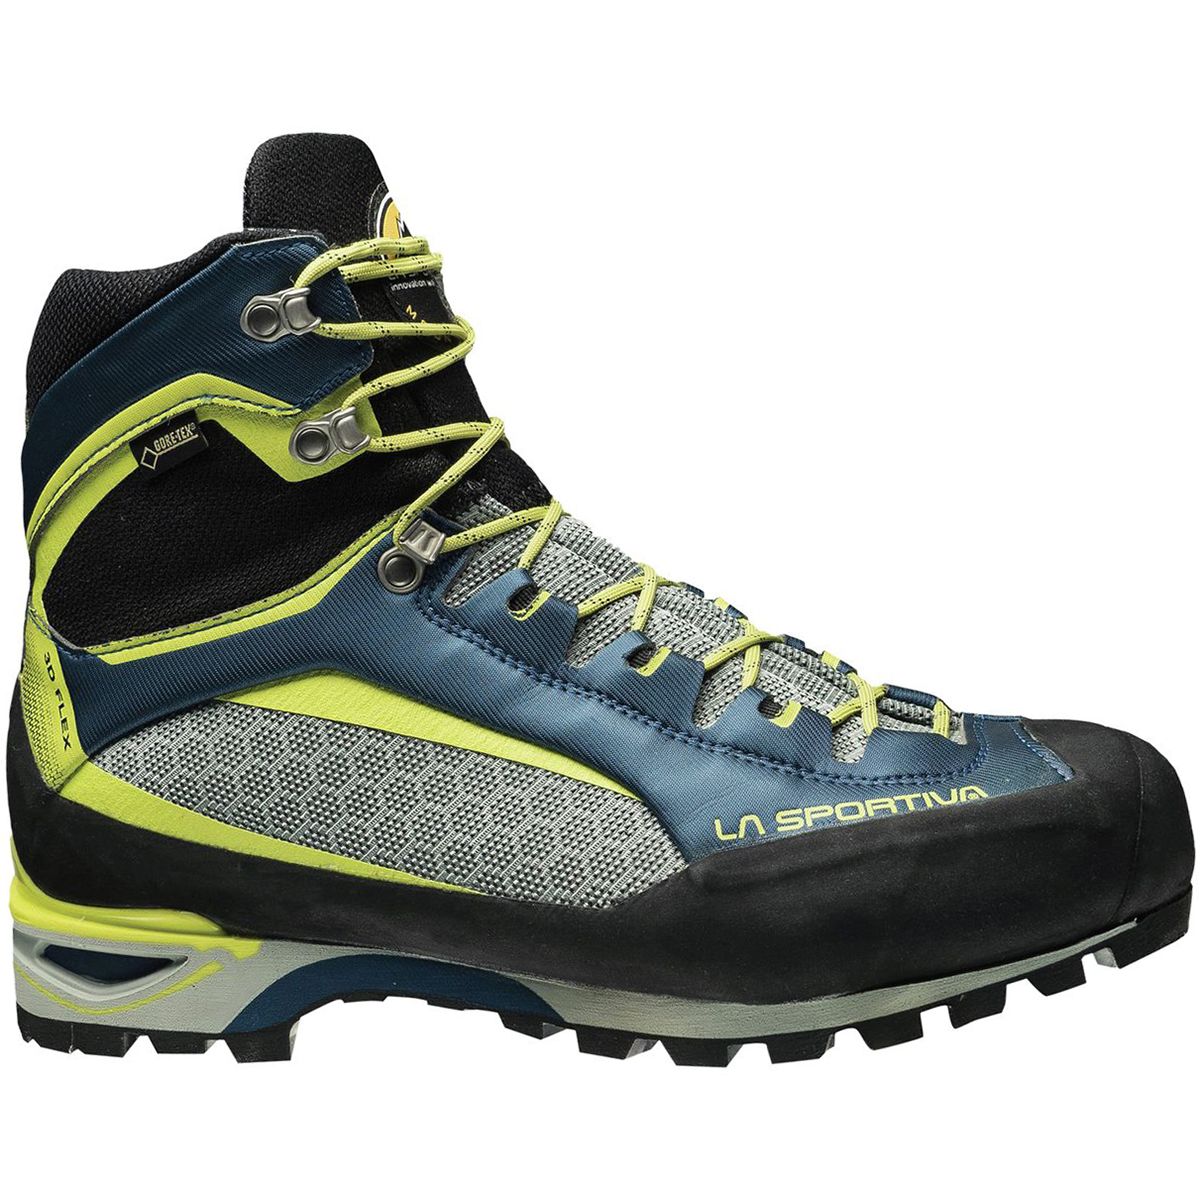 Trango Tower GTX Mountaineering Boot - Men